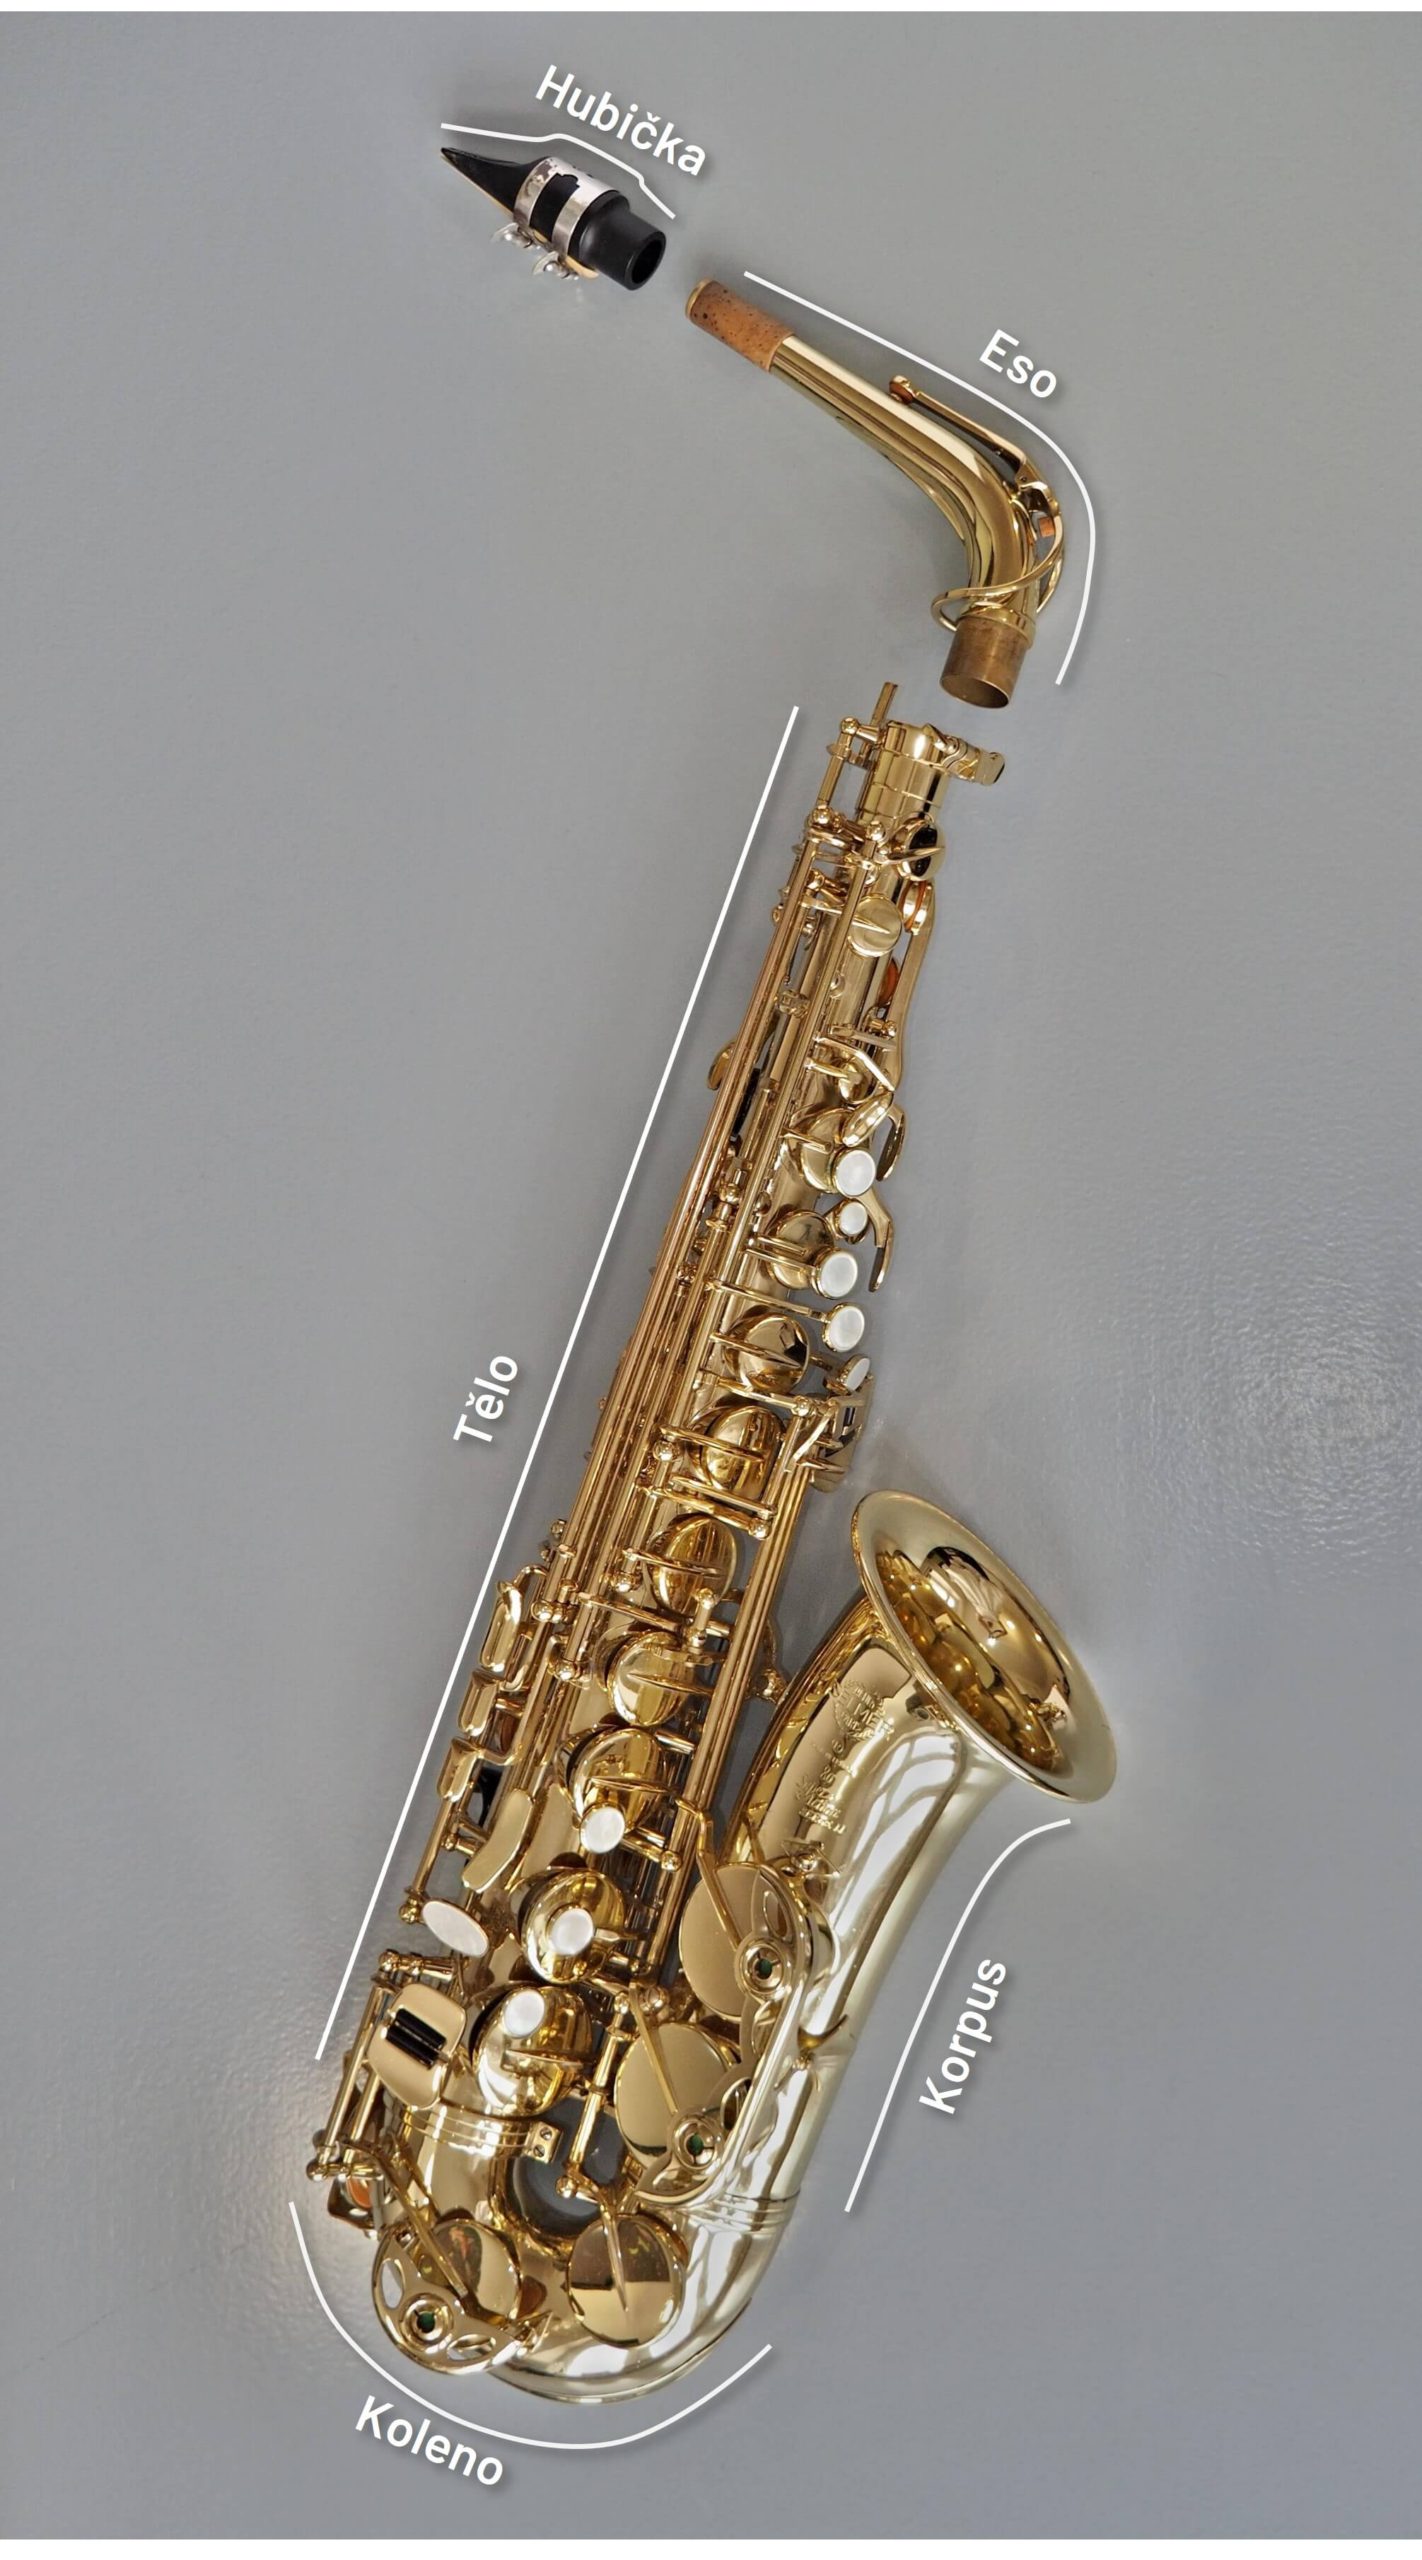 Popis saxofonu - hubička, eso, tělo, koleno, korpu